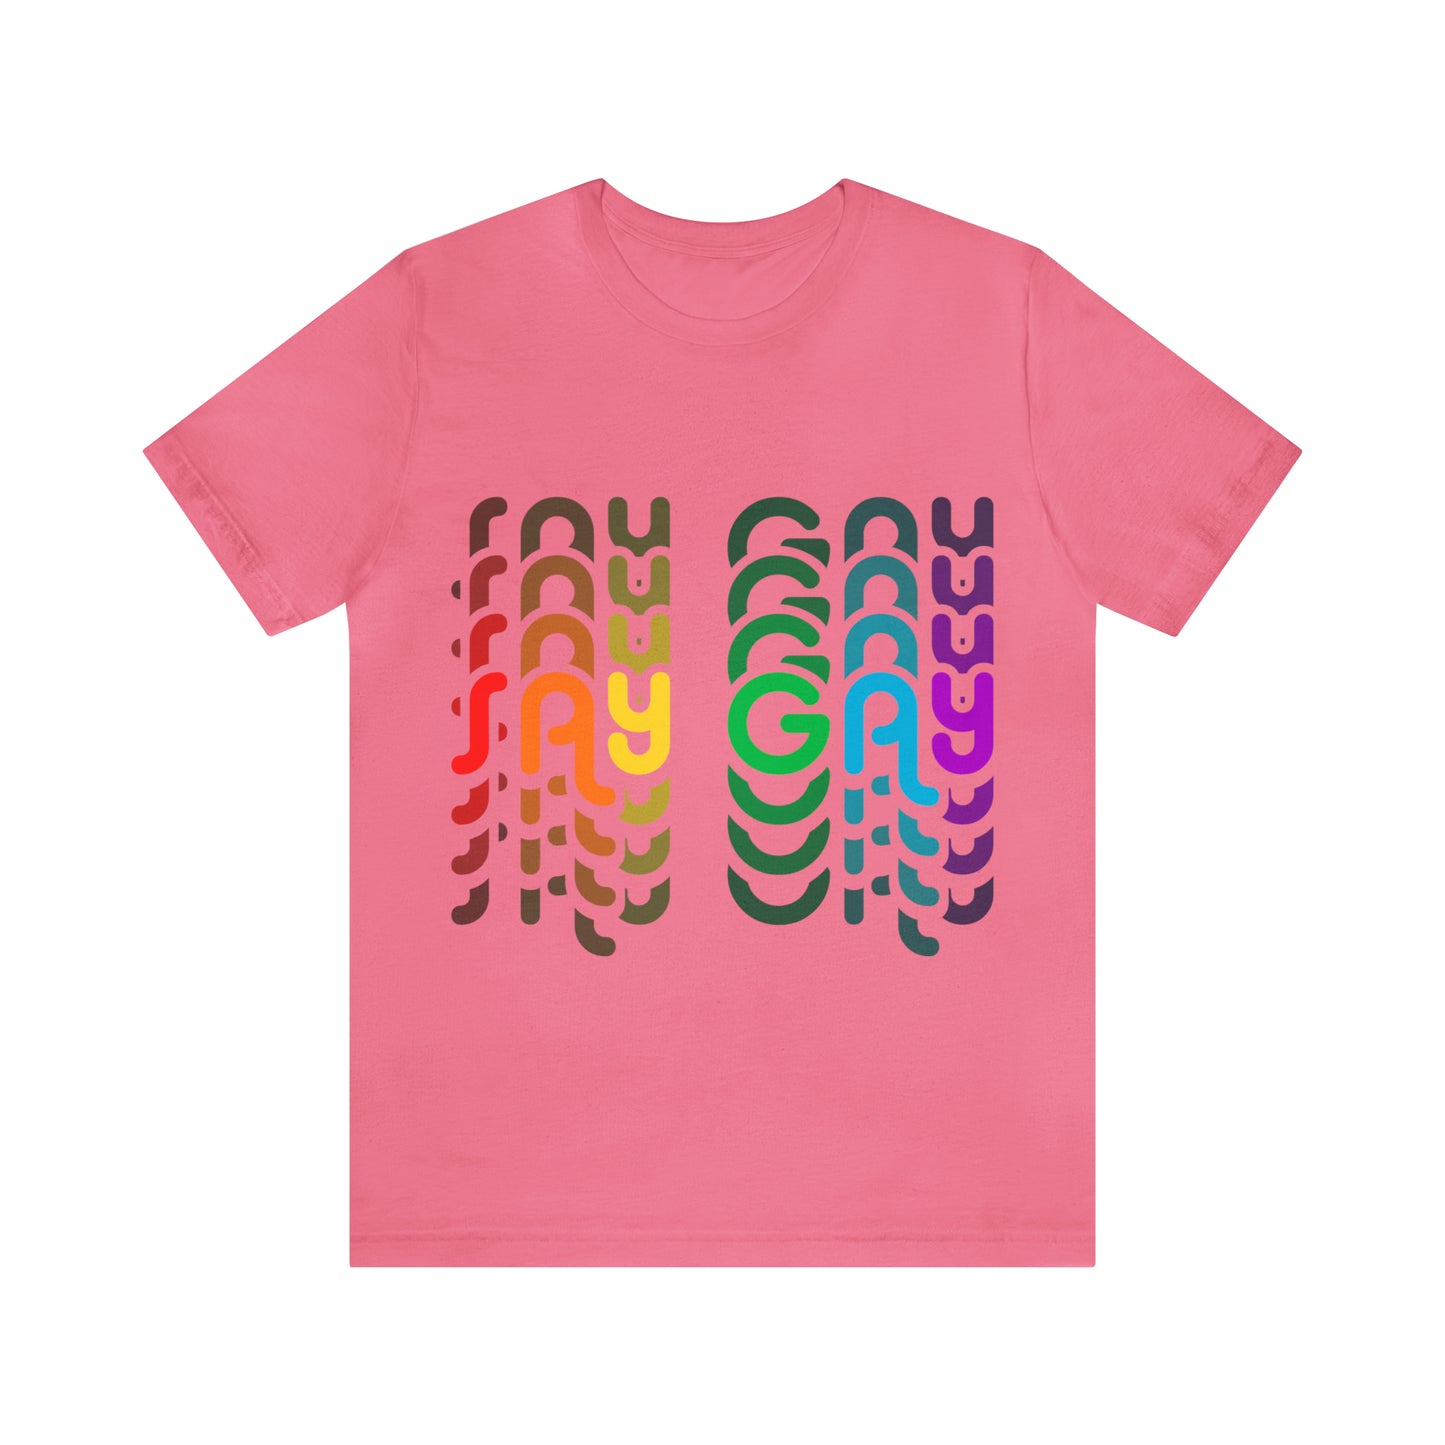 Say Gay 2 - Unisex T-Shirt